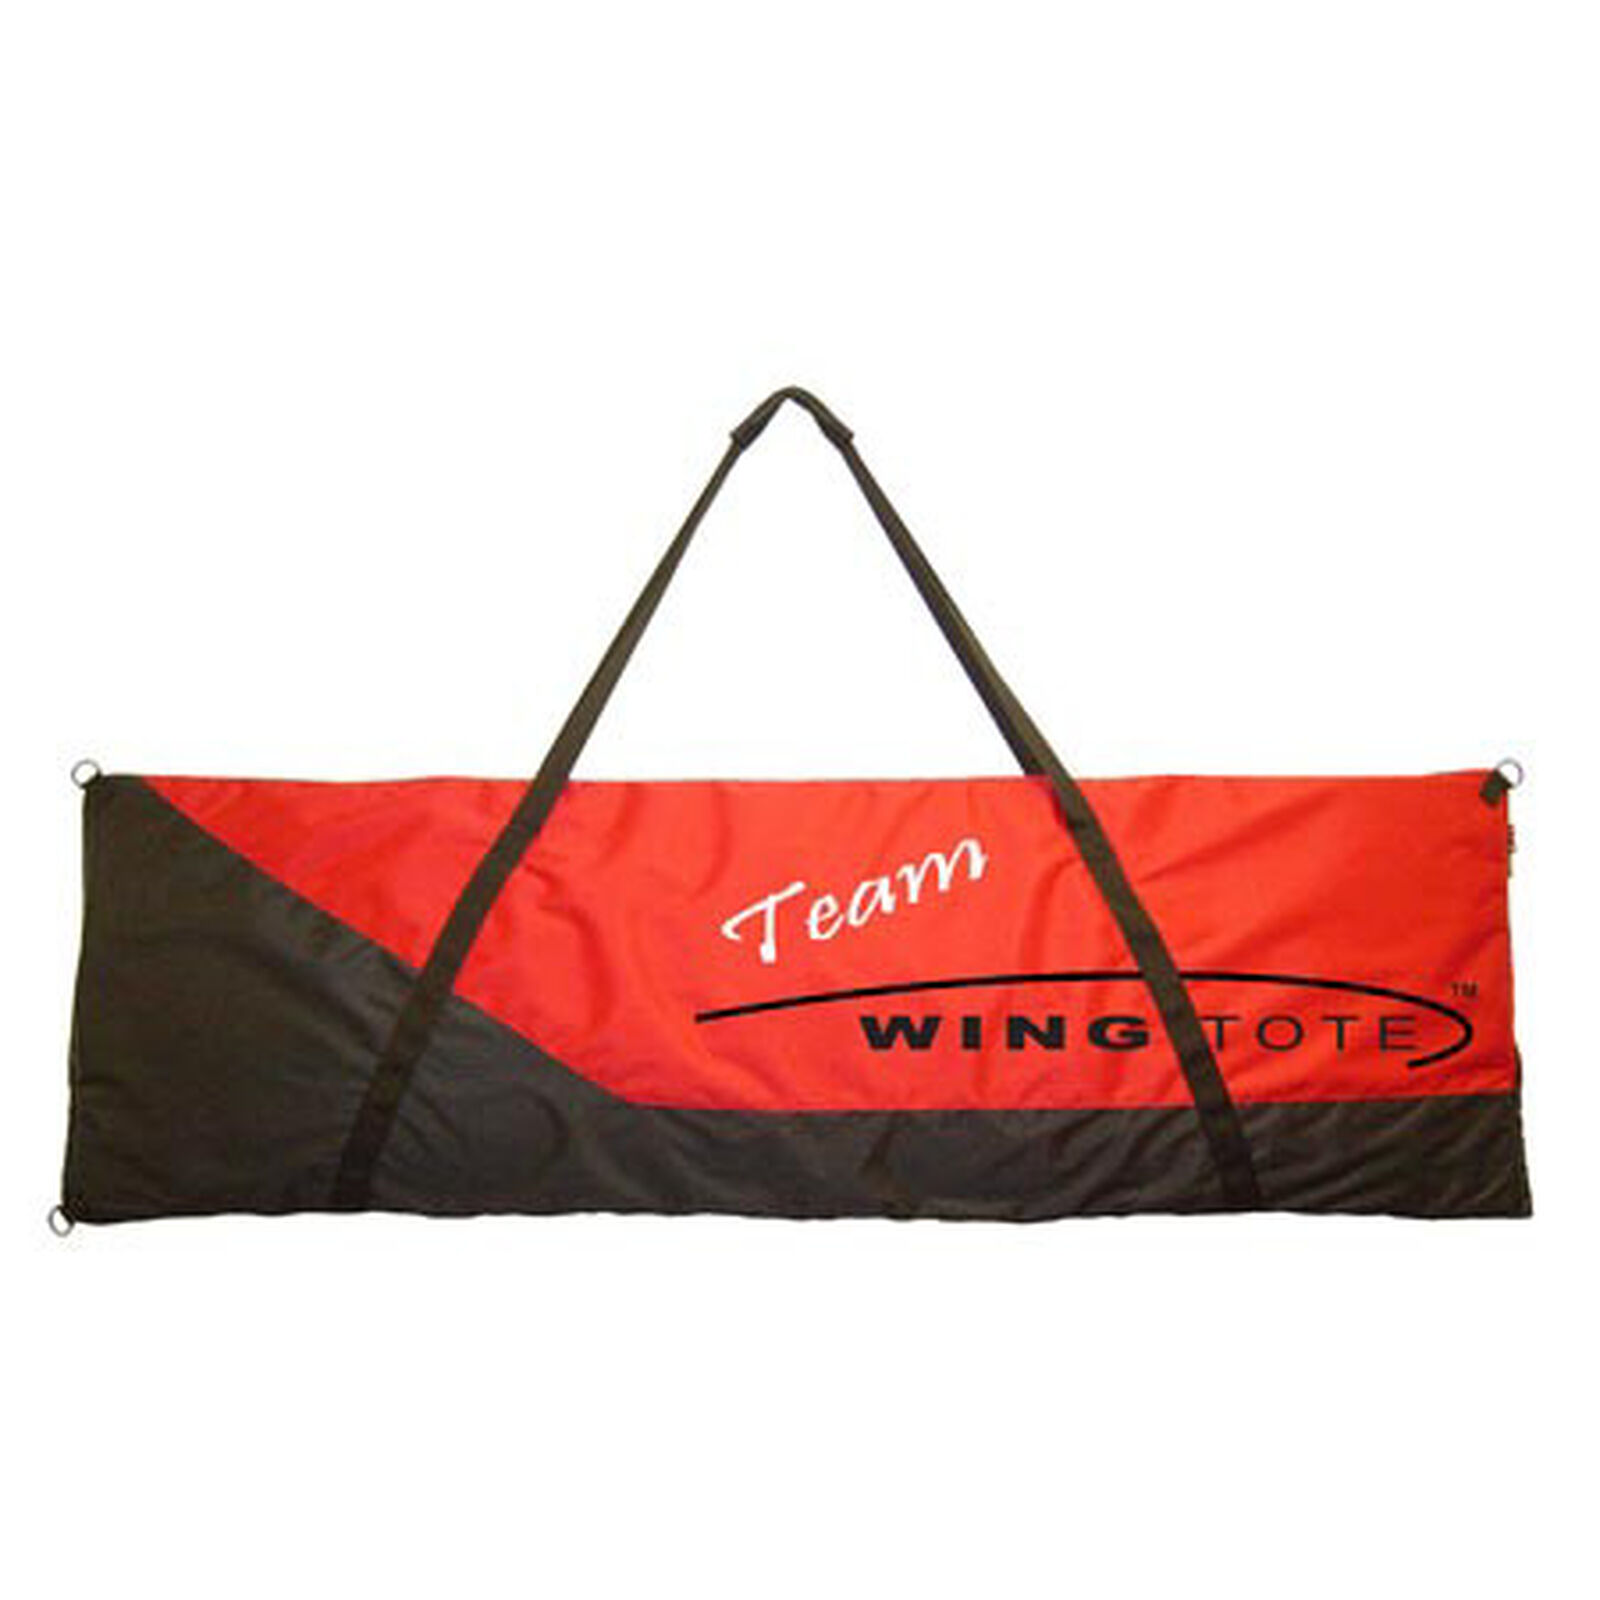 44" Single Wing/Tail Bag, Red/Black